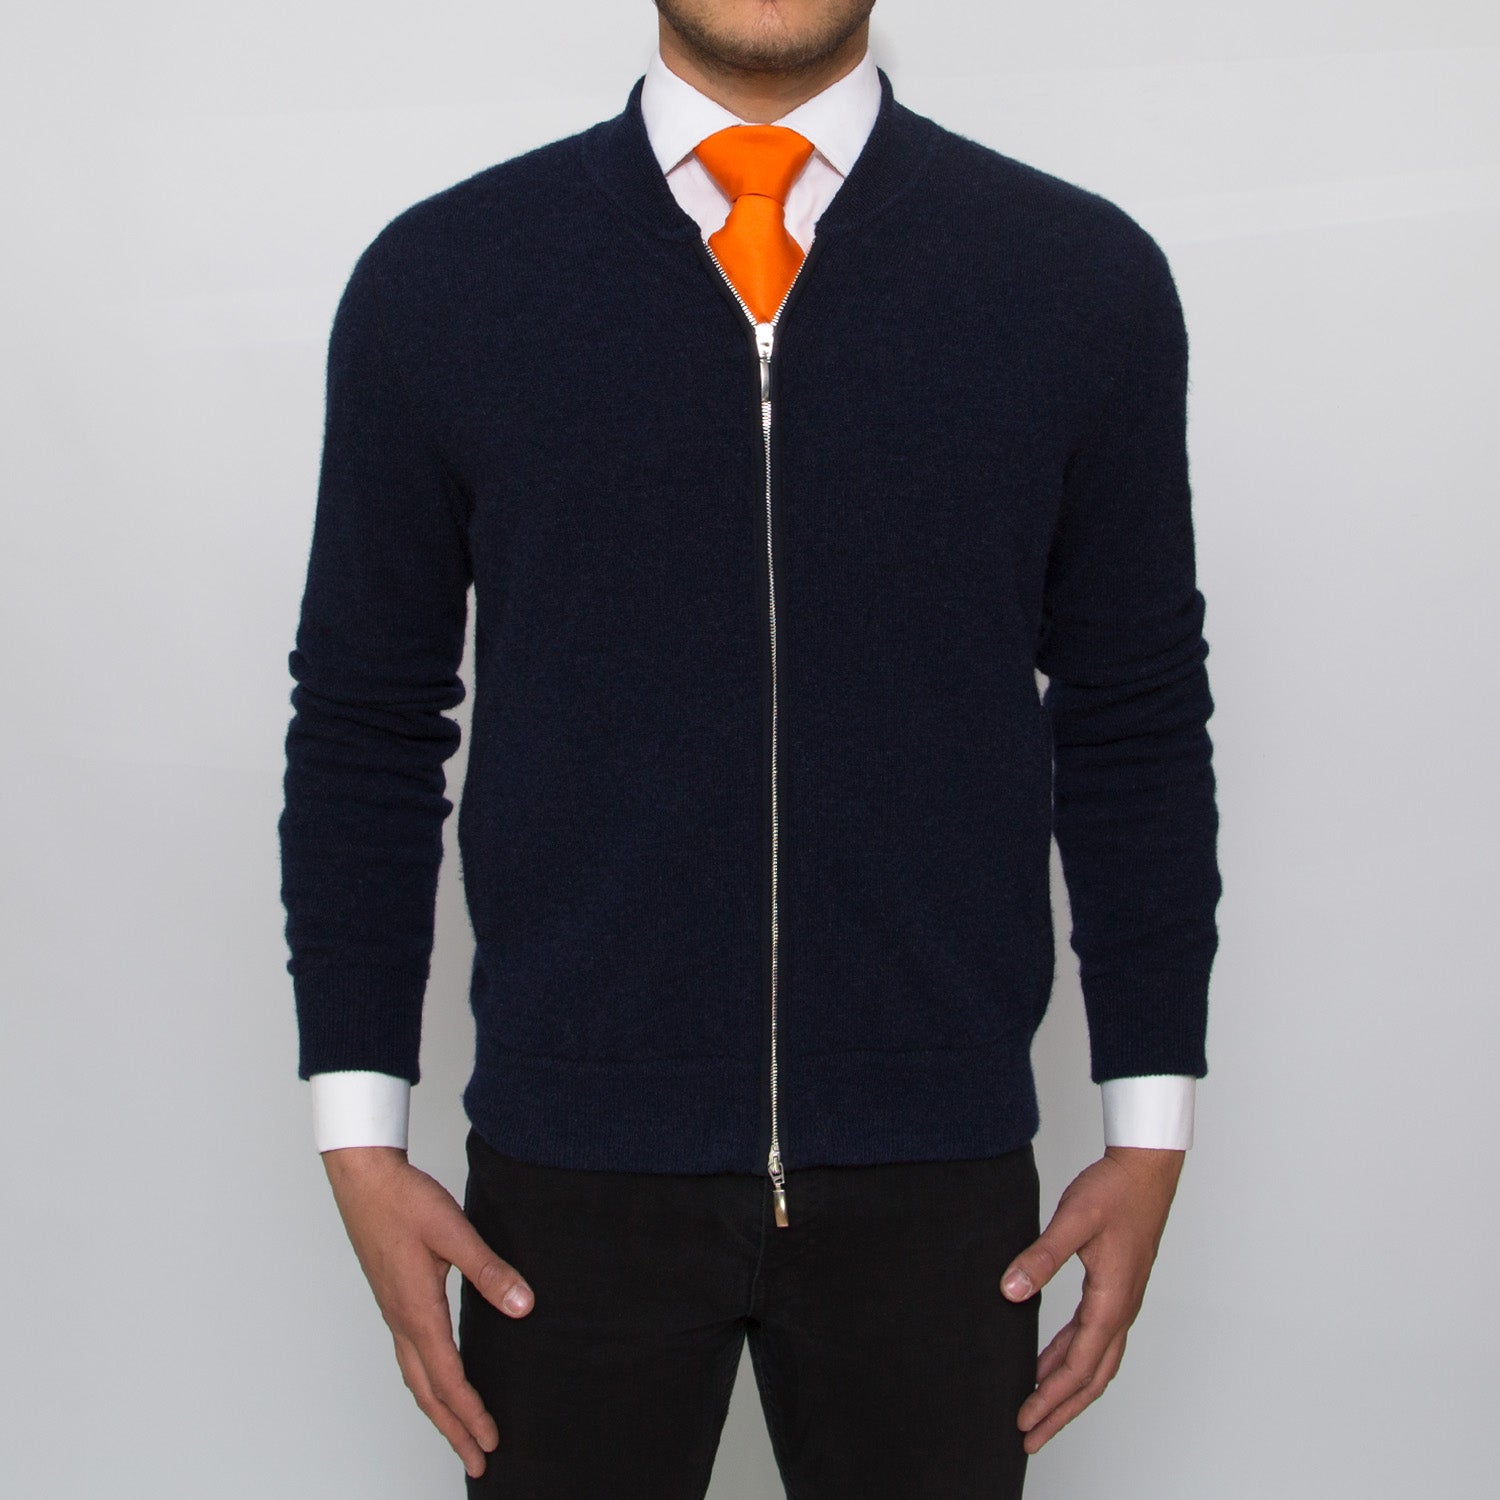 DARIO'S Couture Seven-Fold Krawatte Frankfurt in 100% Twillseide in Orange